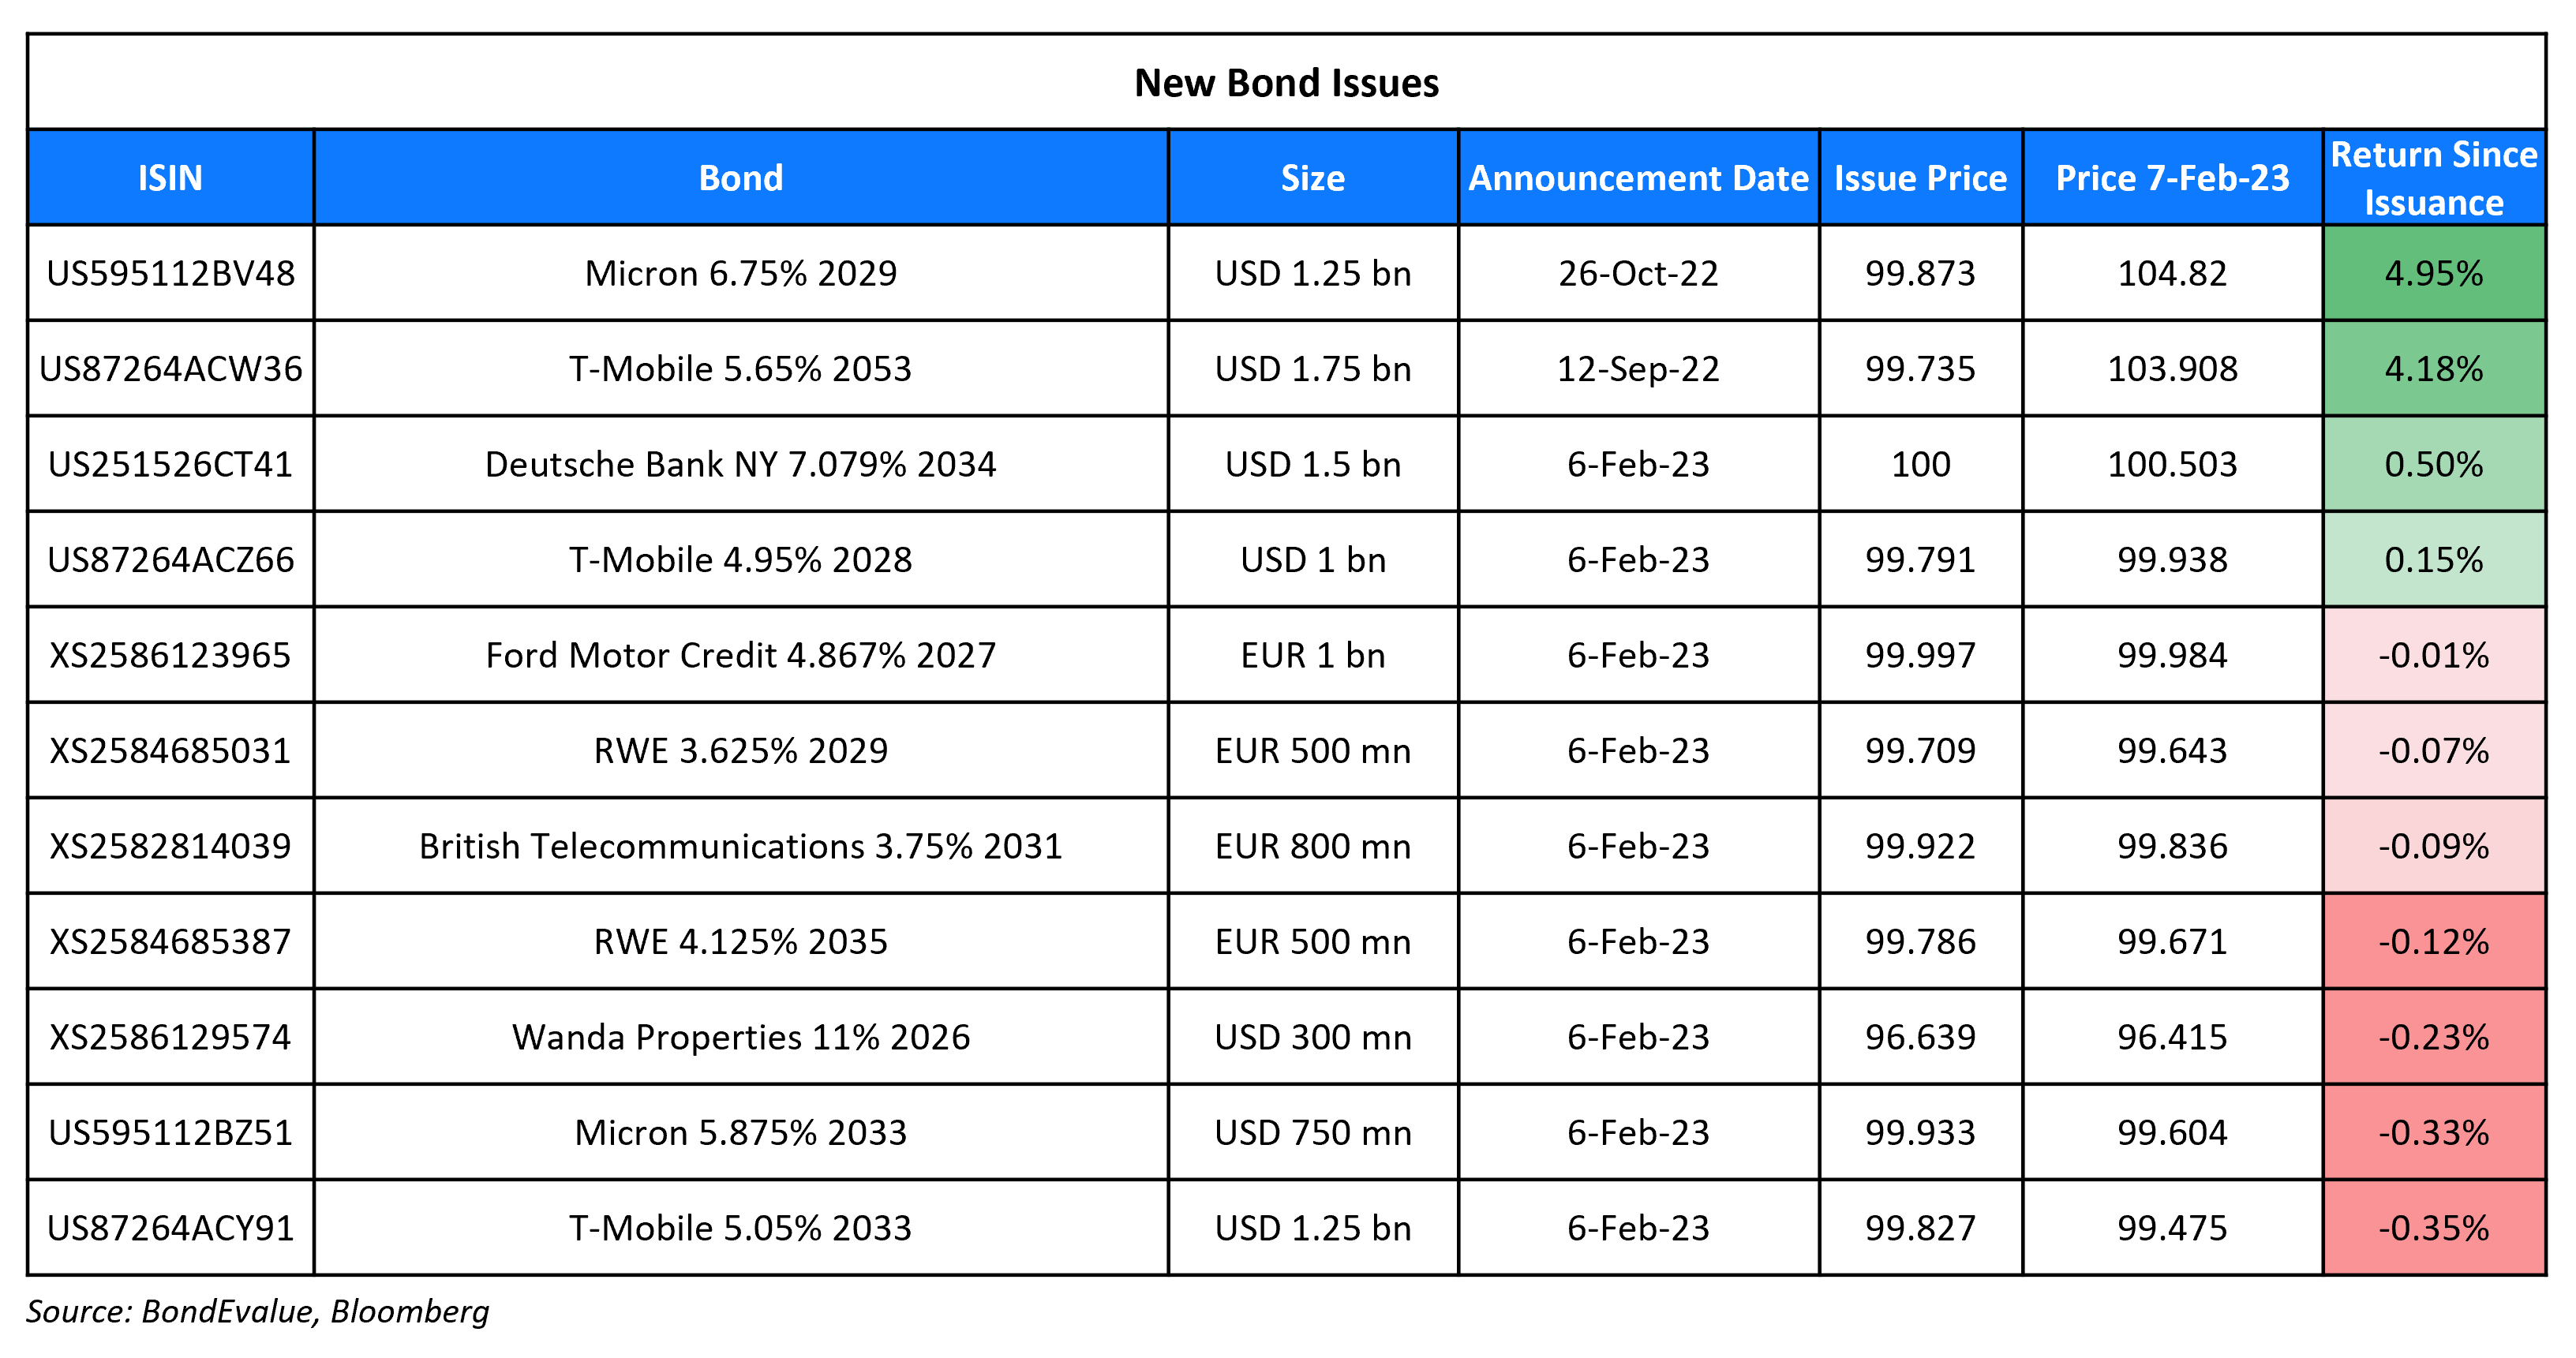 New Bond Issues 7 Feb 23